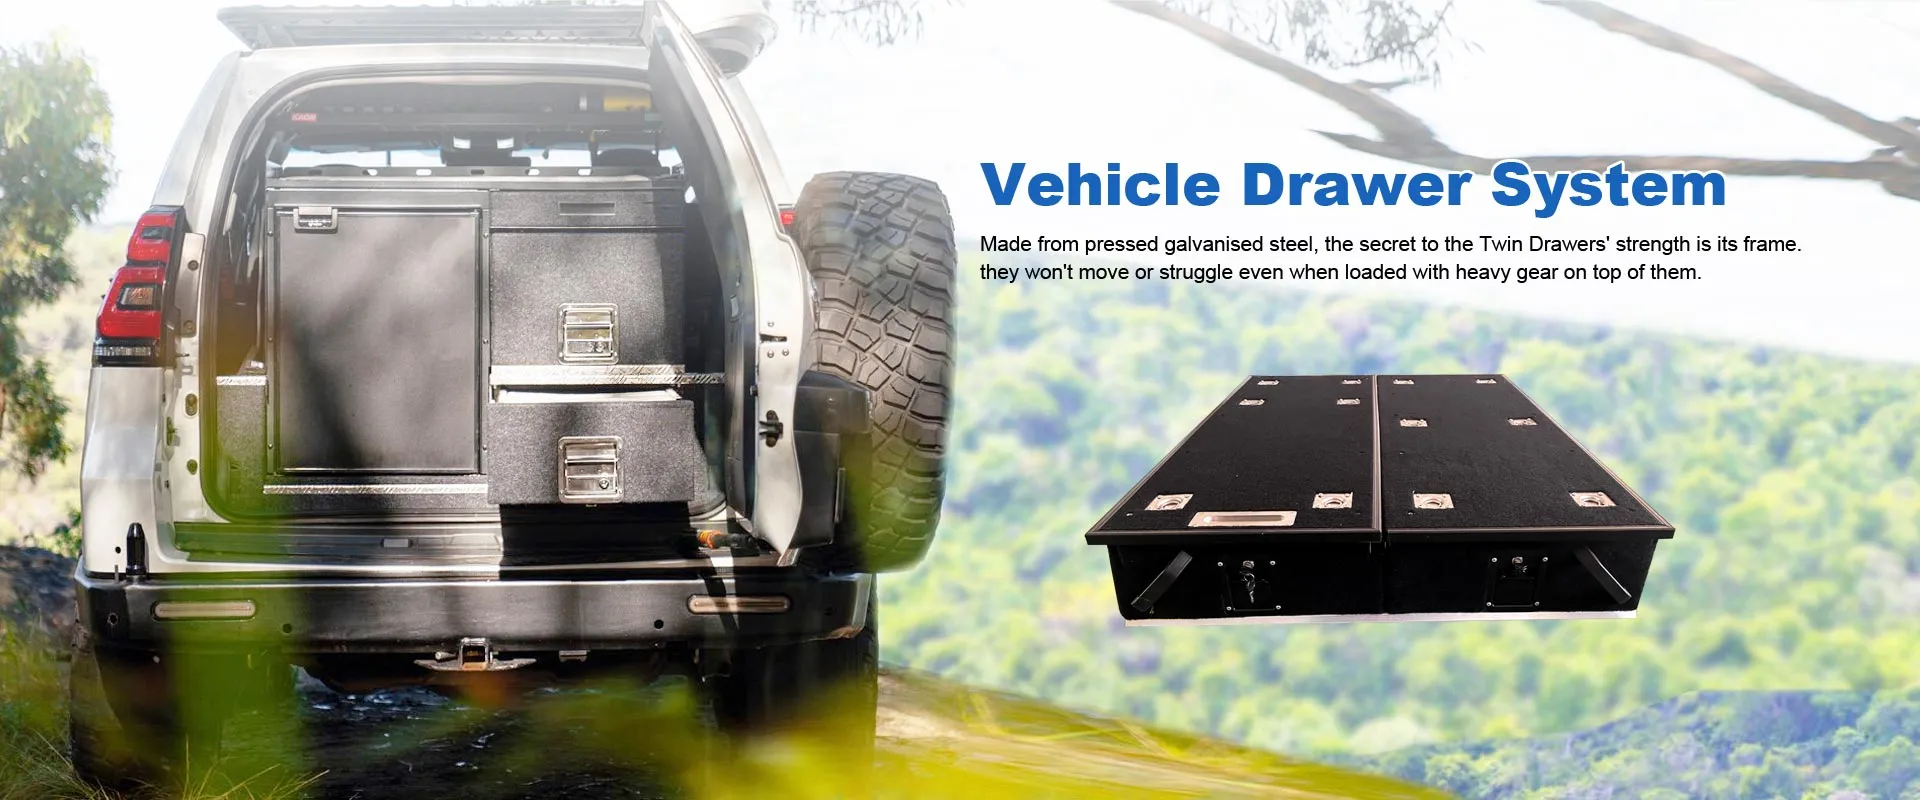 Vehicle Drawer System Manufacturer